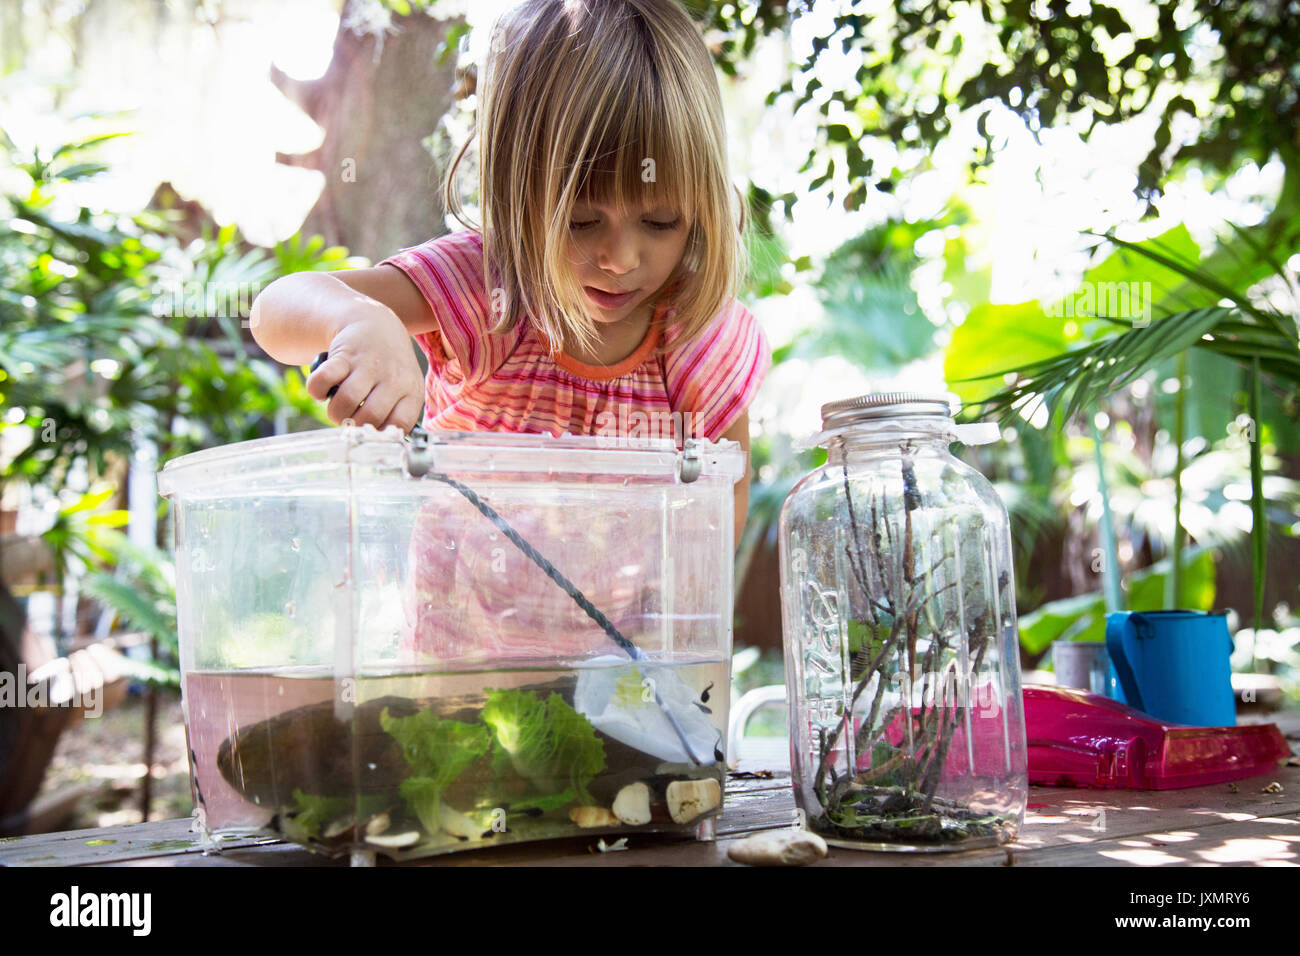 Girl scooping fishing net in plastic tadpole pond on garden table Stock  Photo - Alamy